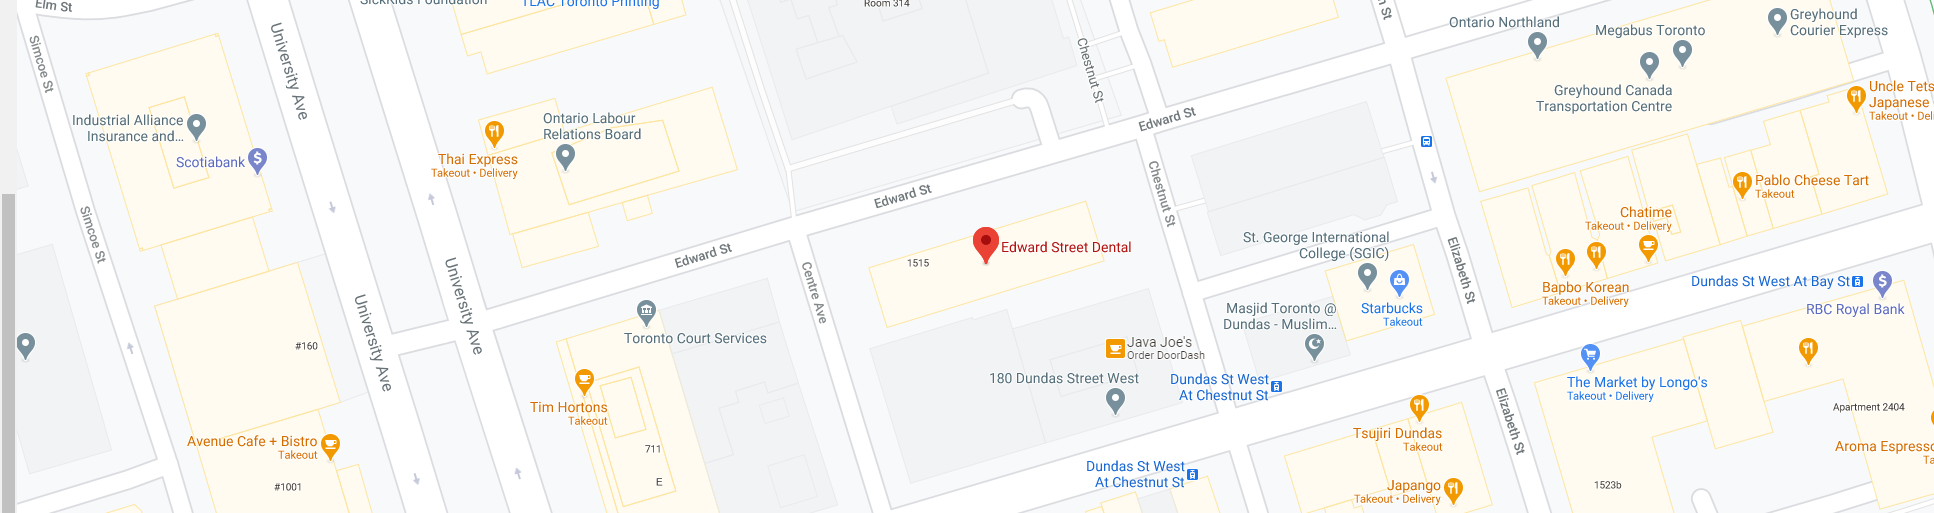 map of edward steet dental